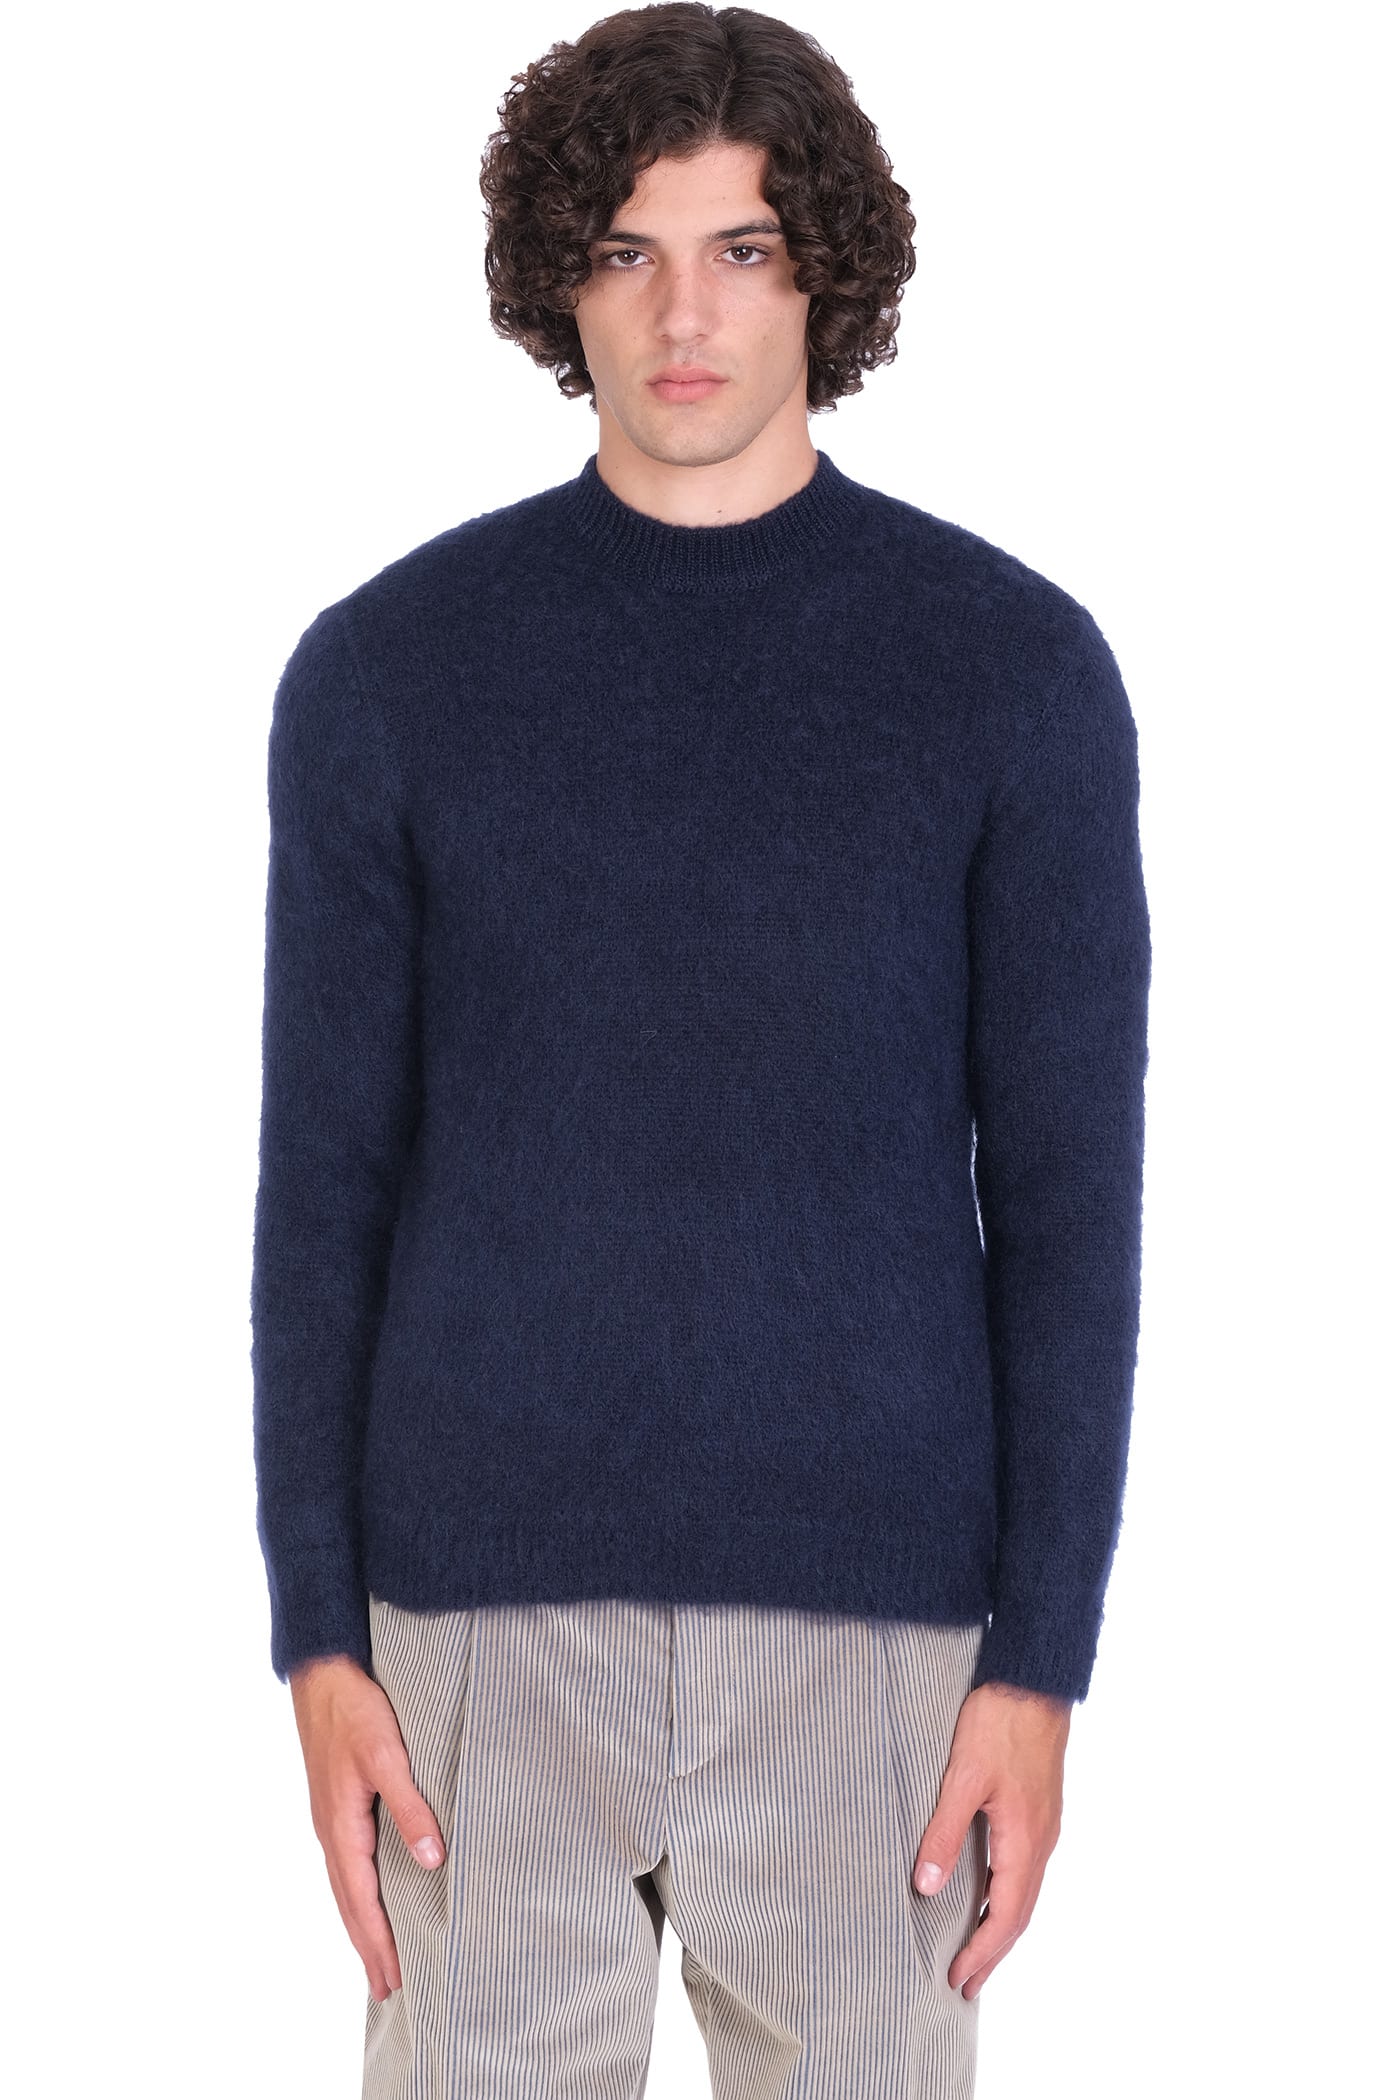 Giorgio Armani Knitwear In Blue Wool